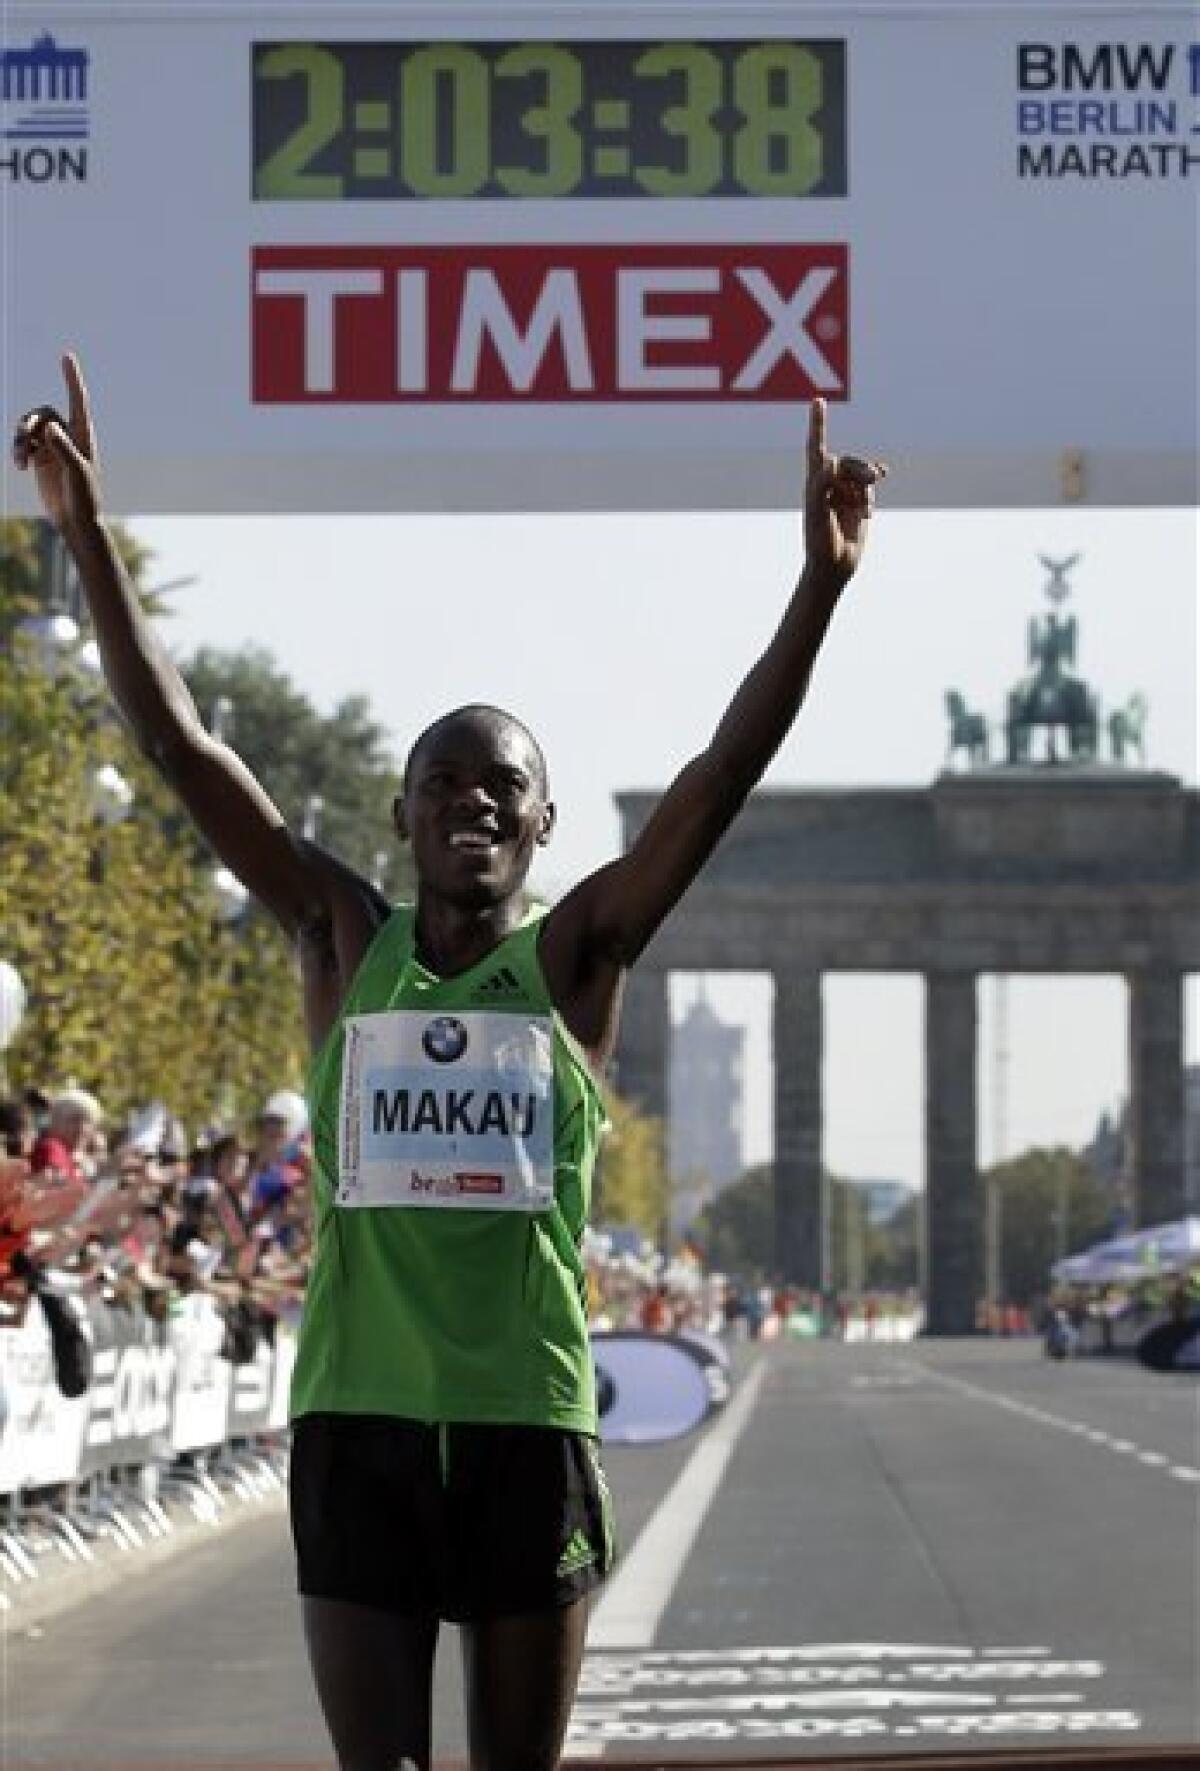 Makau sets world record in Berlin Marathon - The San Diego Union